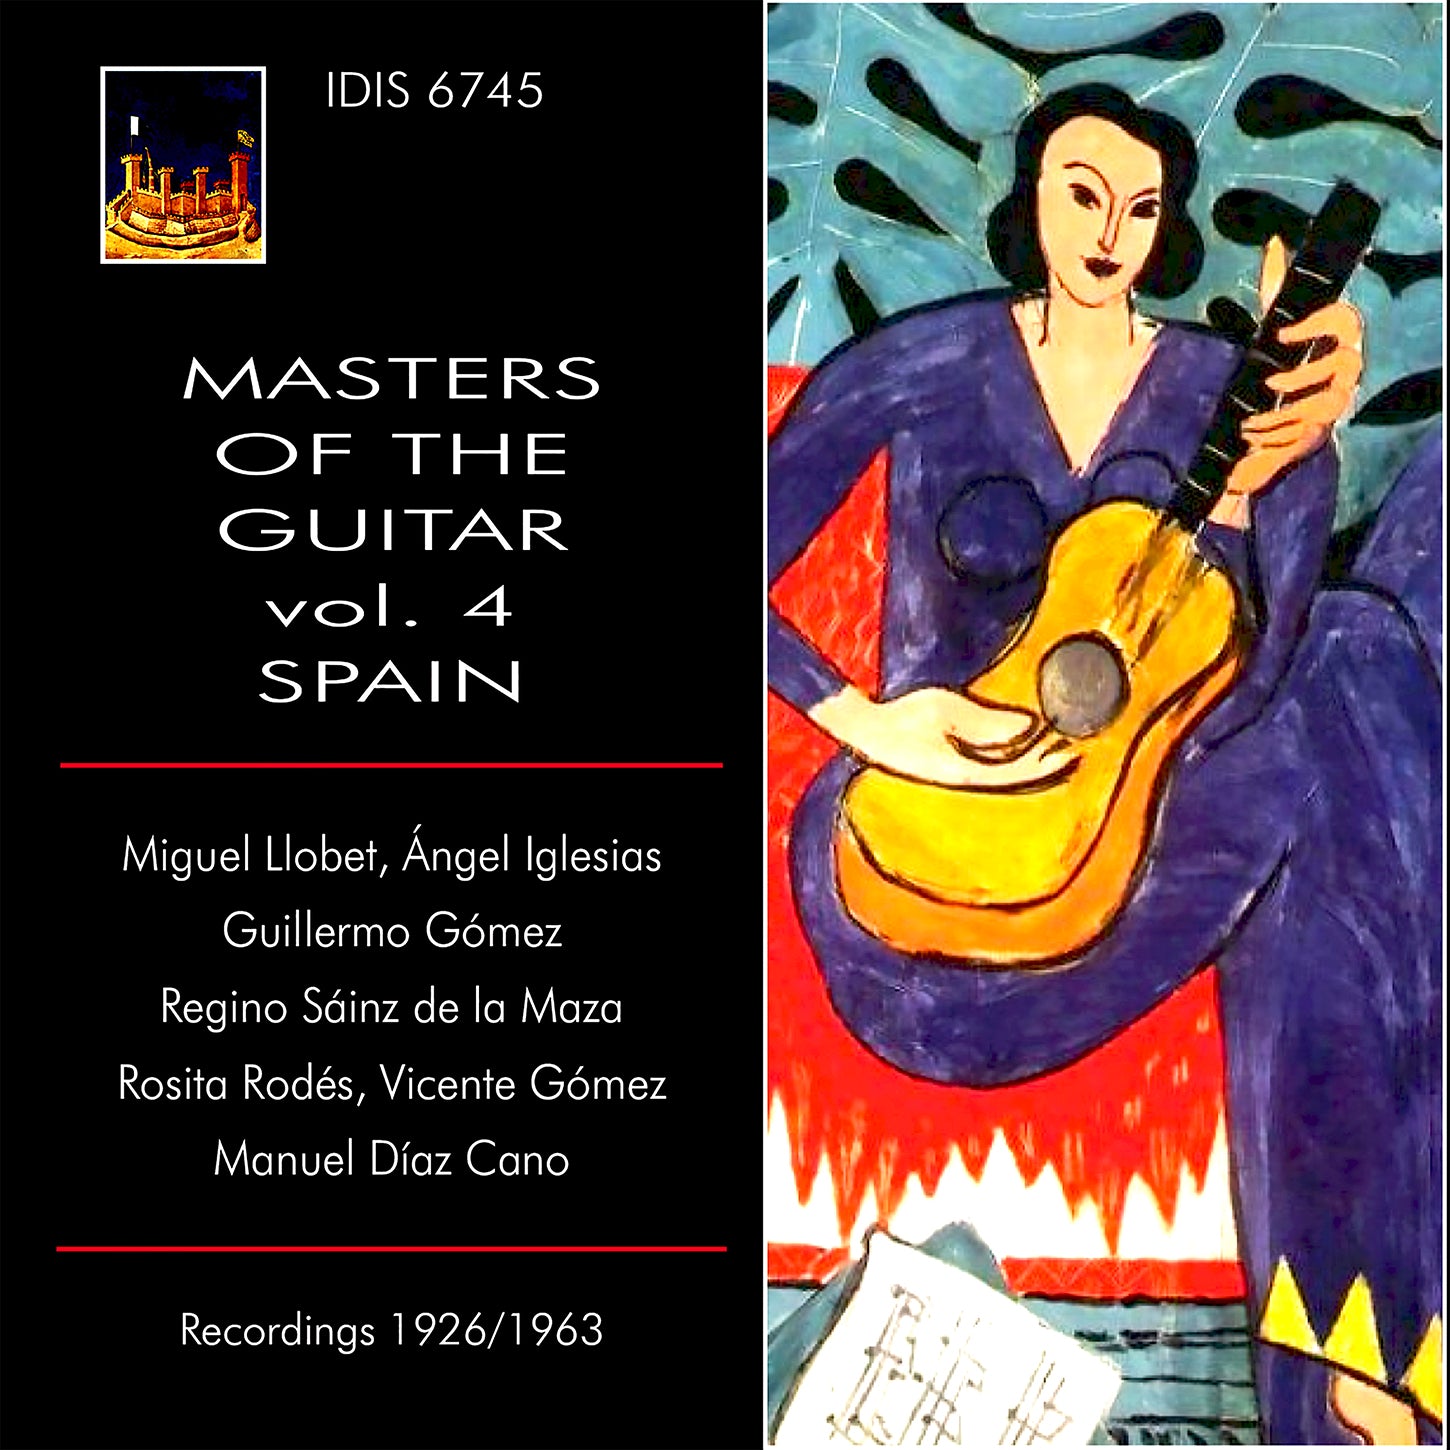 Albéniz, Granados et al.: Master of Guitar vol. 4, Spain 1926-63 / Rodes, Anido, Diaz Cano, Gómez, Llobet, Sainz de la Maza, Iglesias, Angel